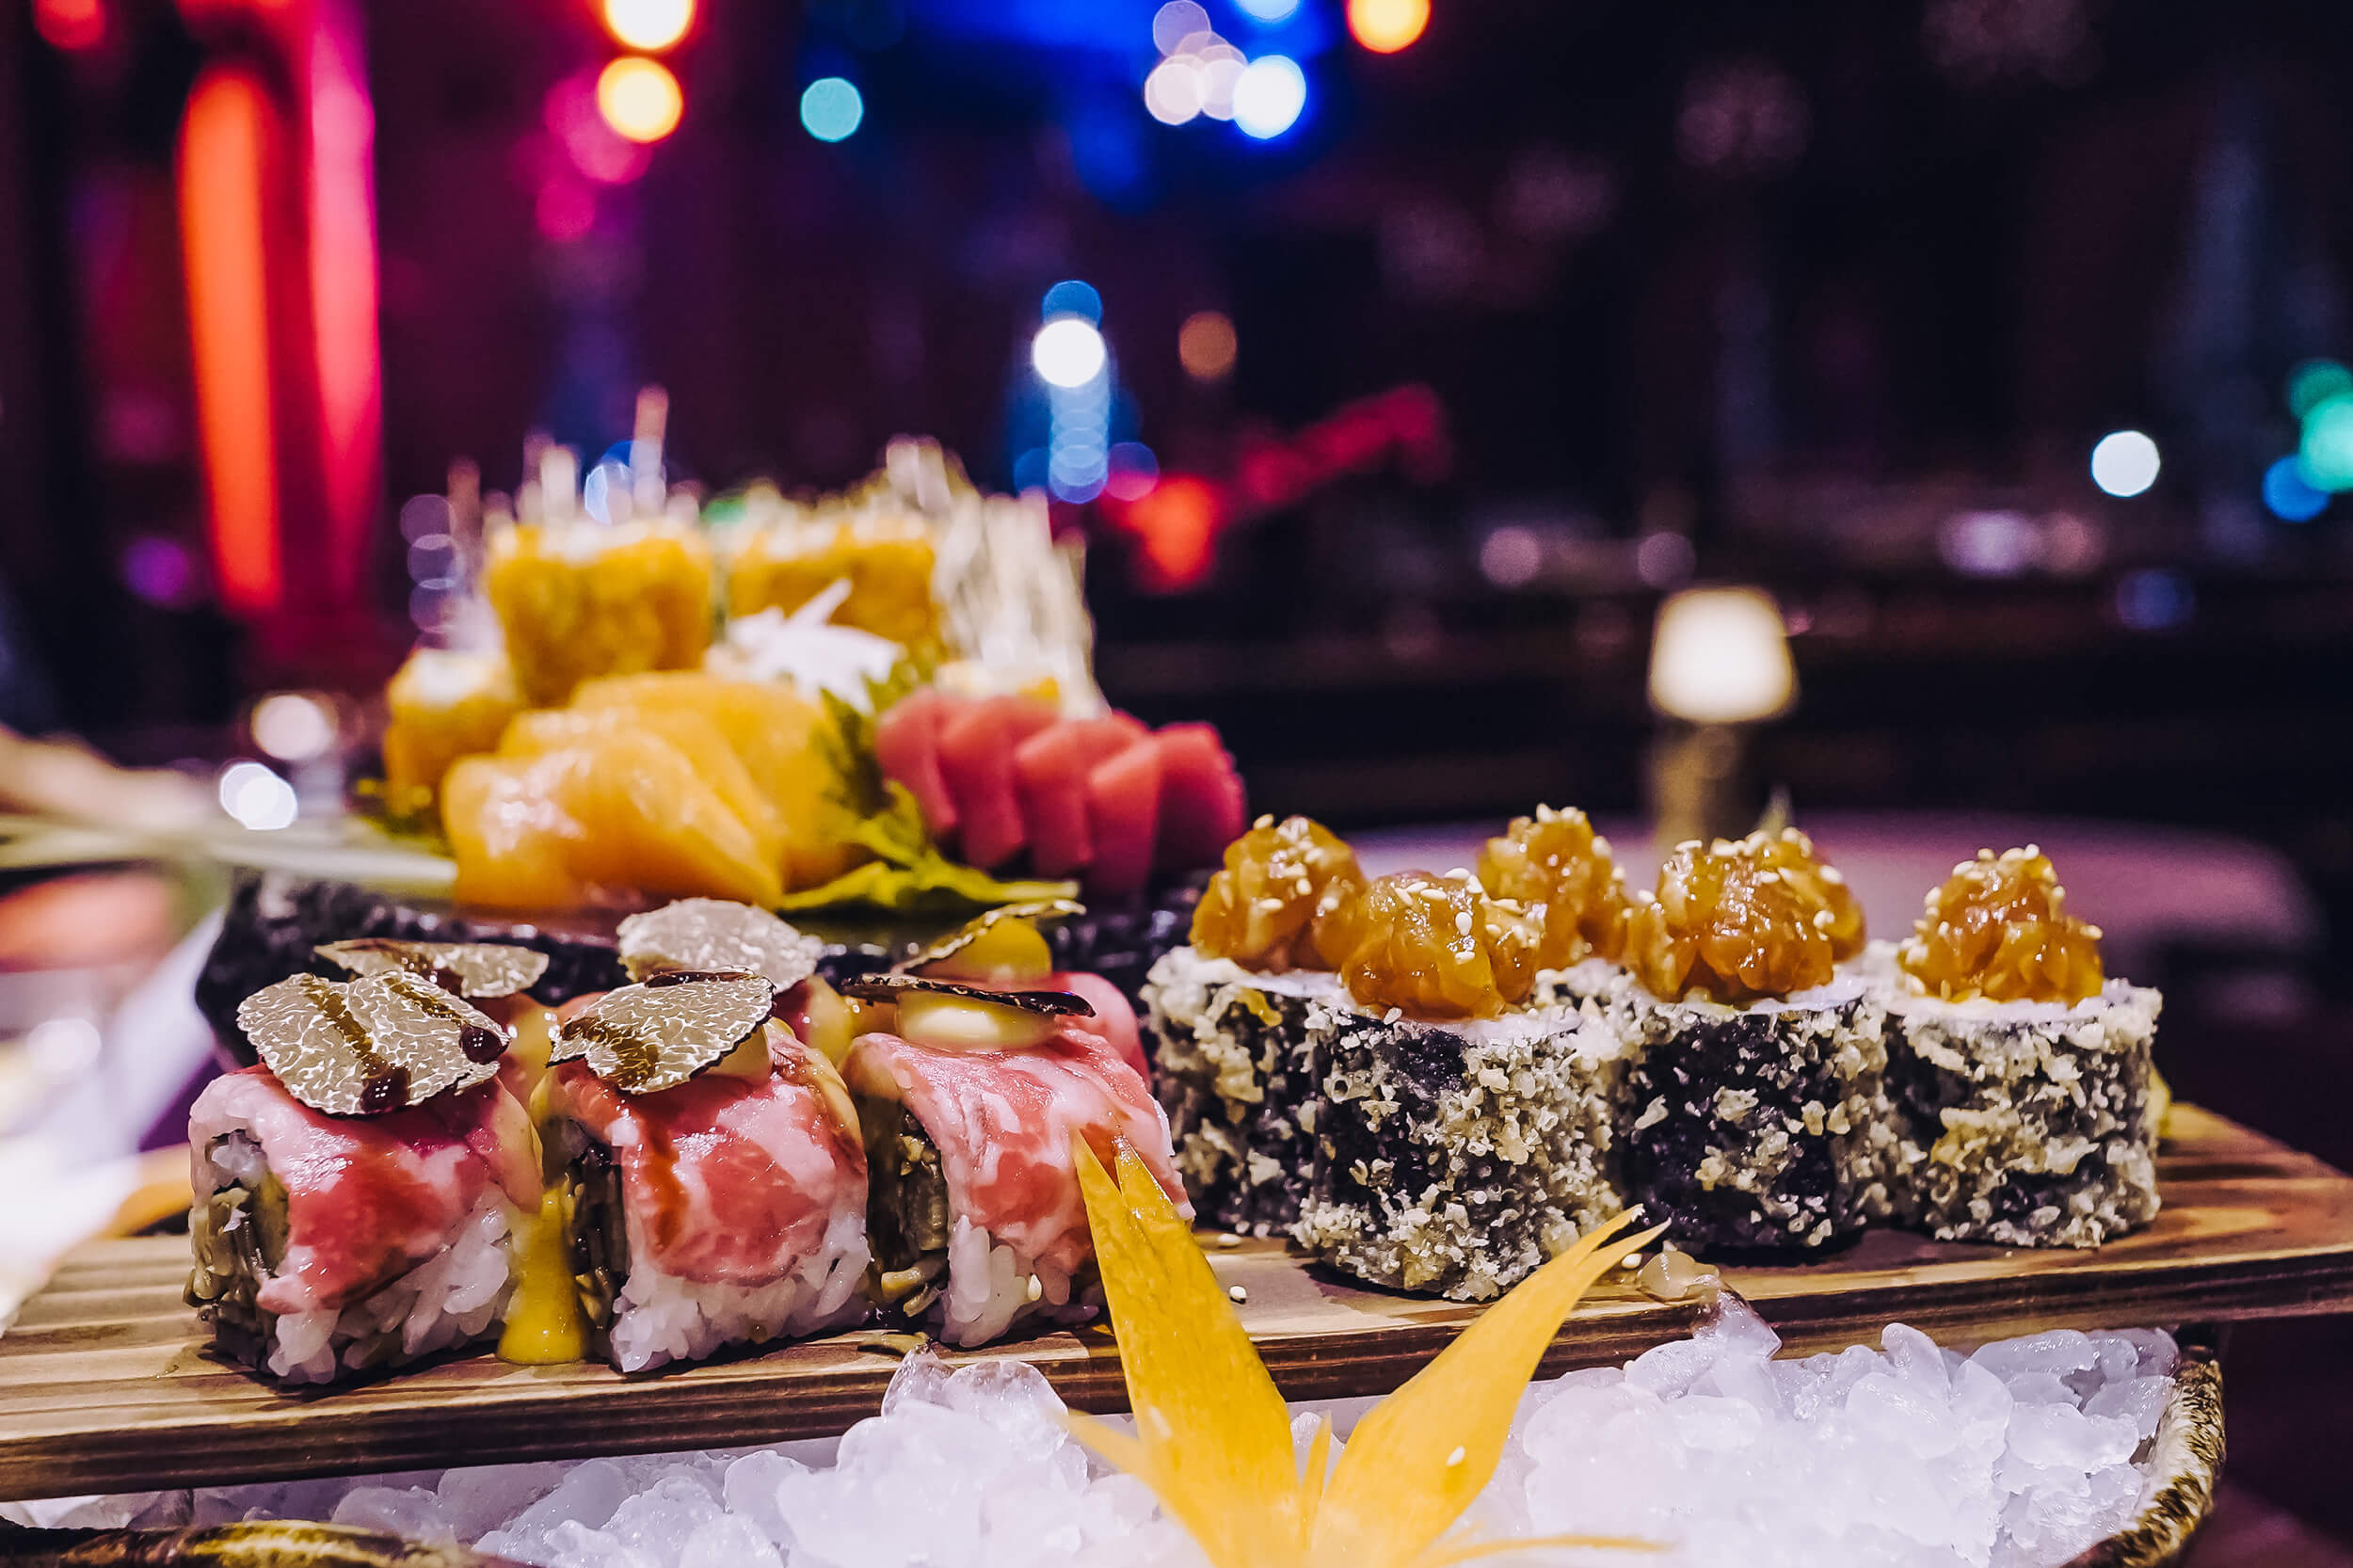 Sushi platter